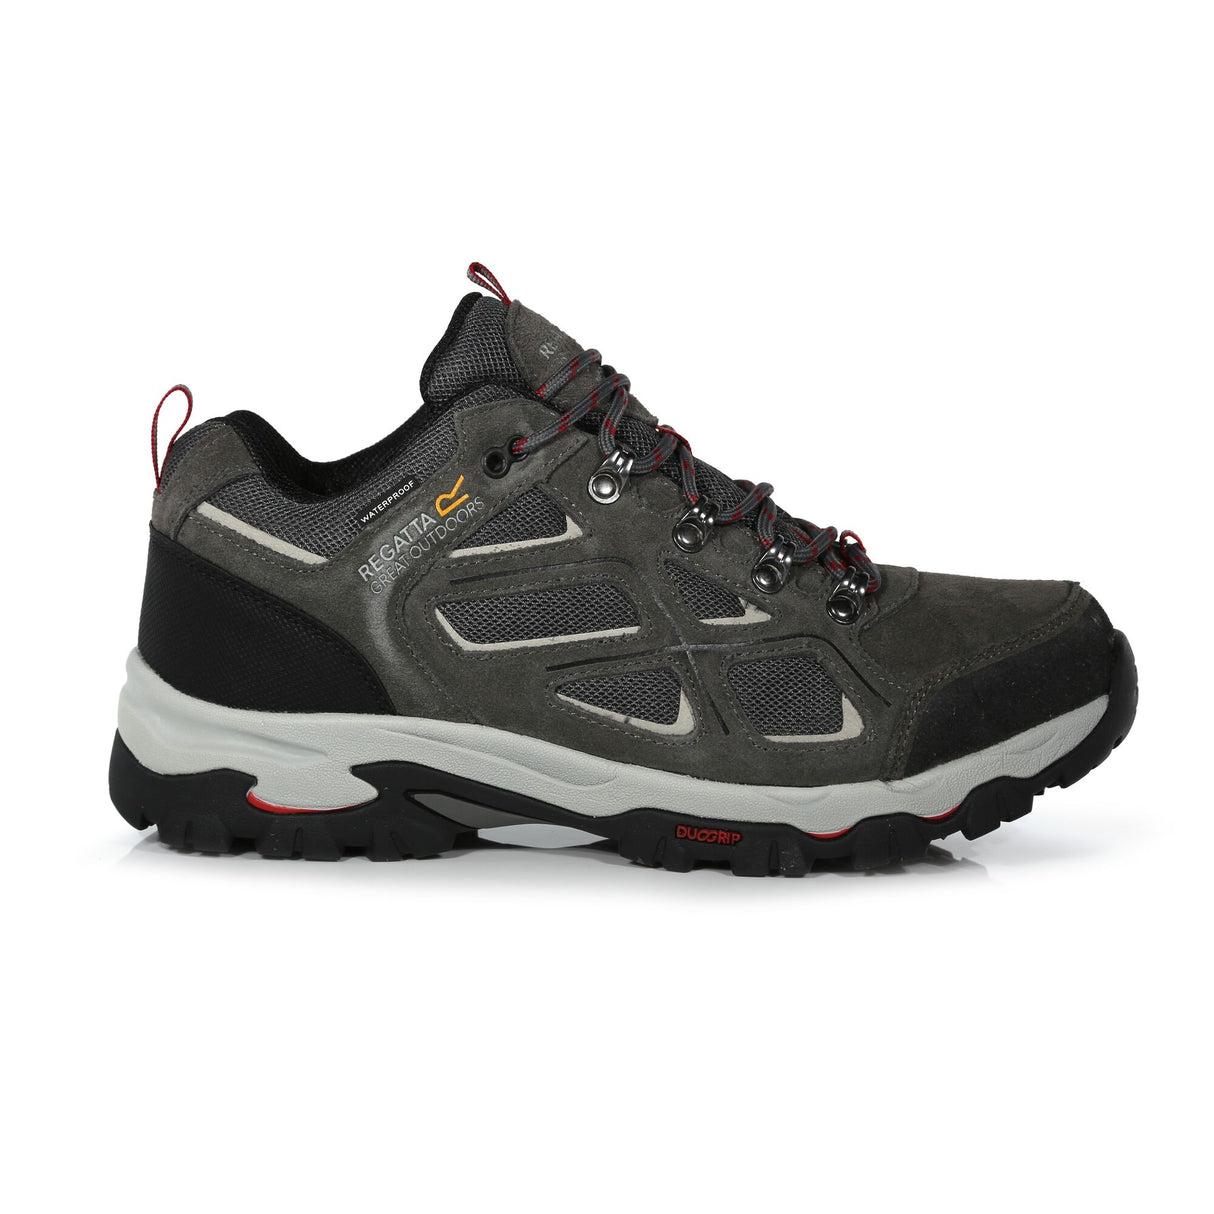 Regatta Tebay Low Mens Waterproof Walking Hiking Shoes - Grey/Red